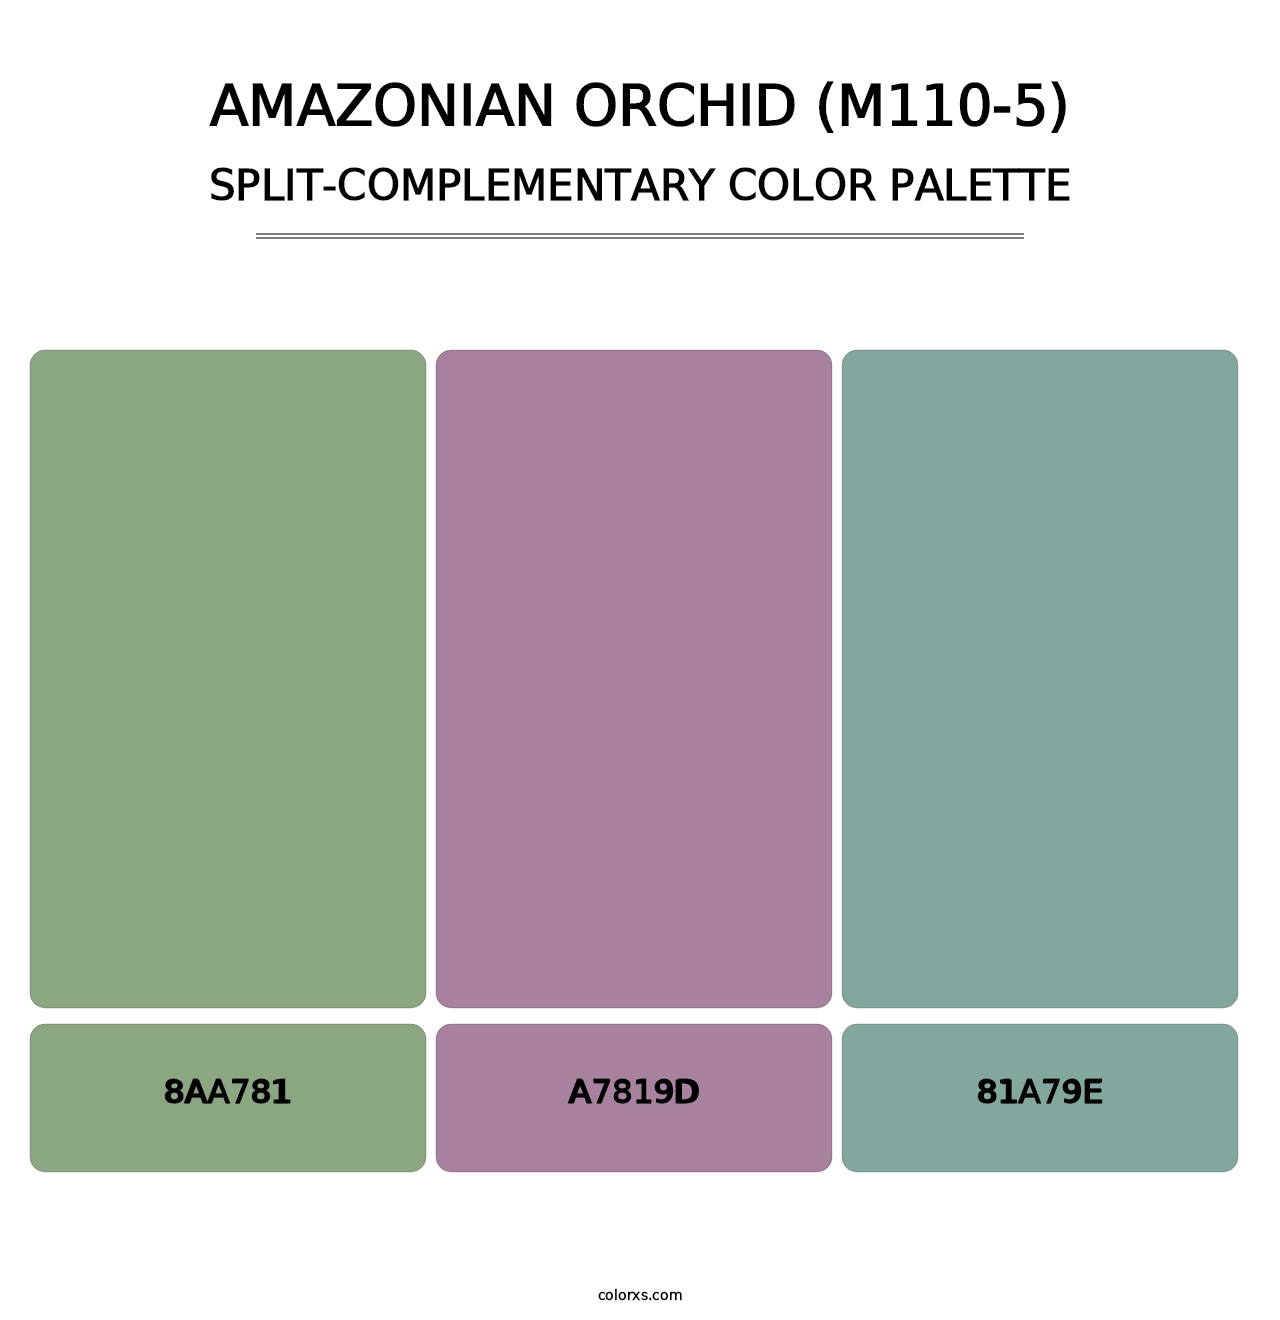 Amazonian Orchid (M110-5) - Split-Complementary Color Palette